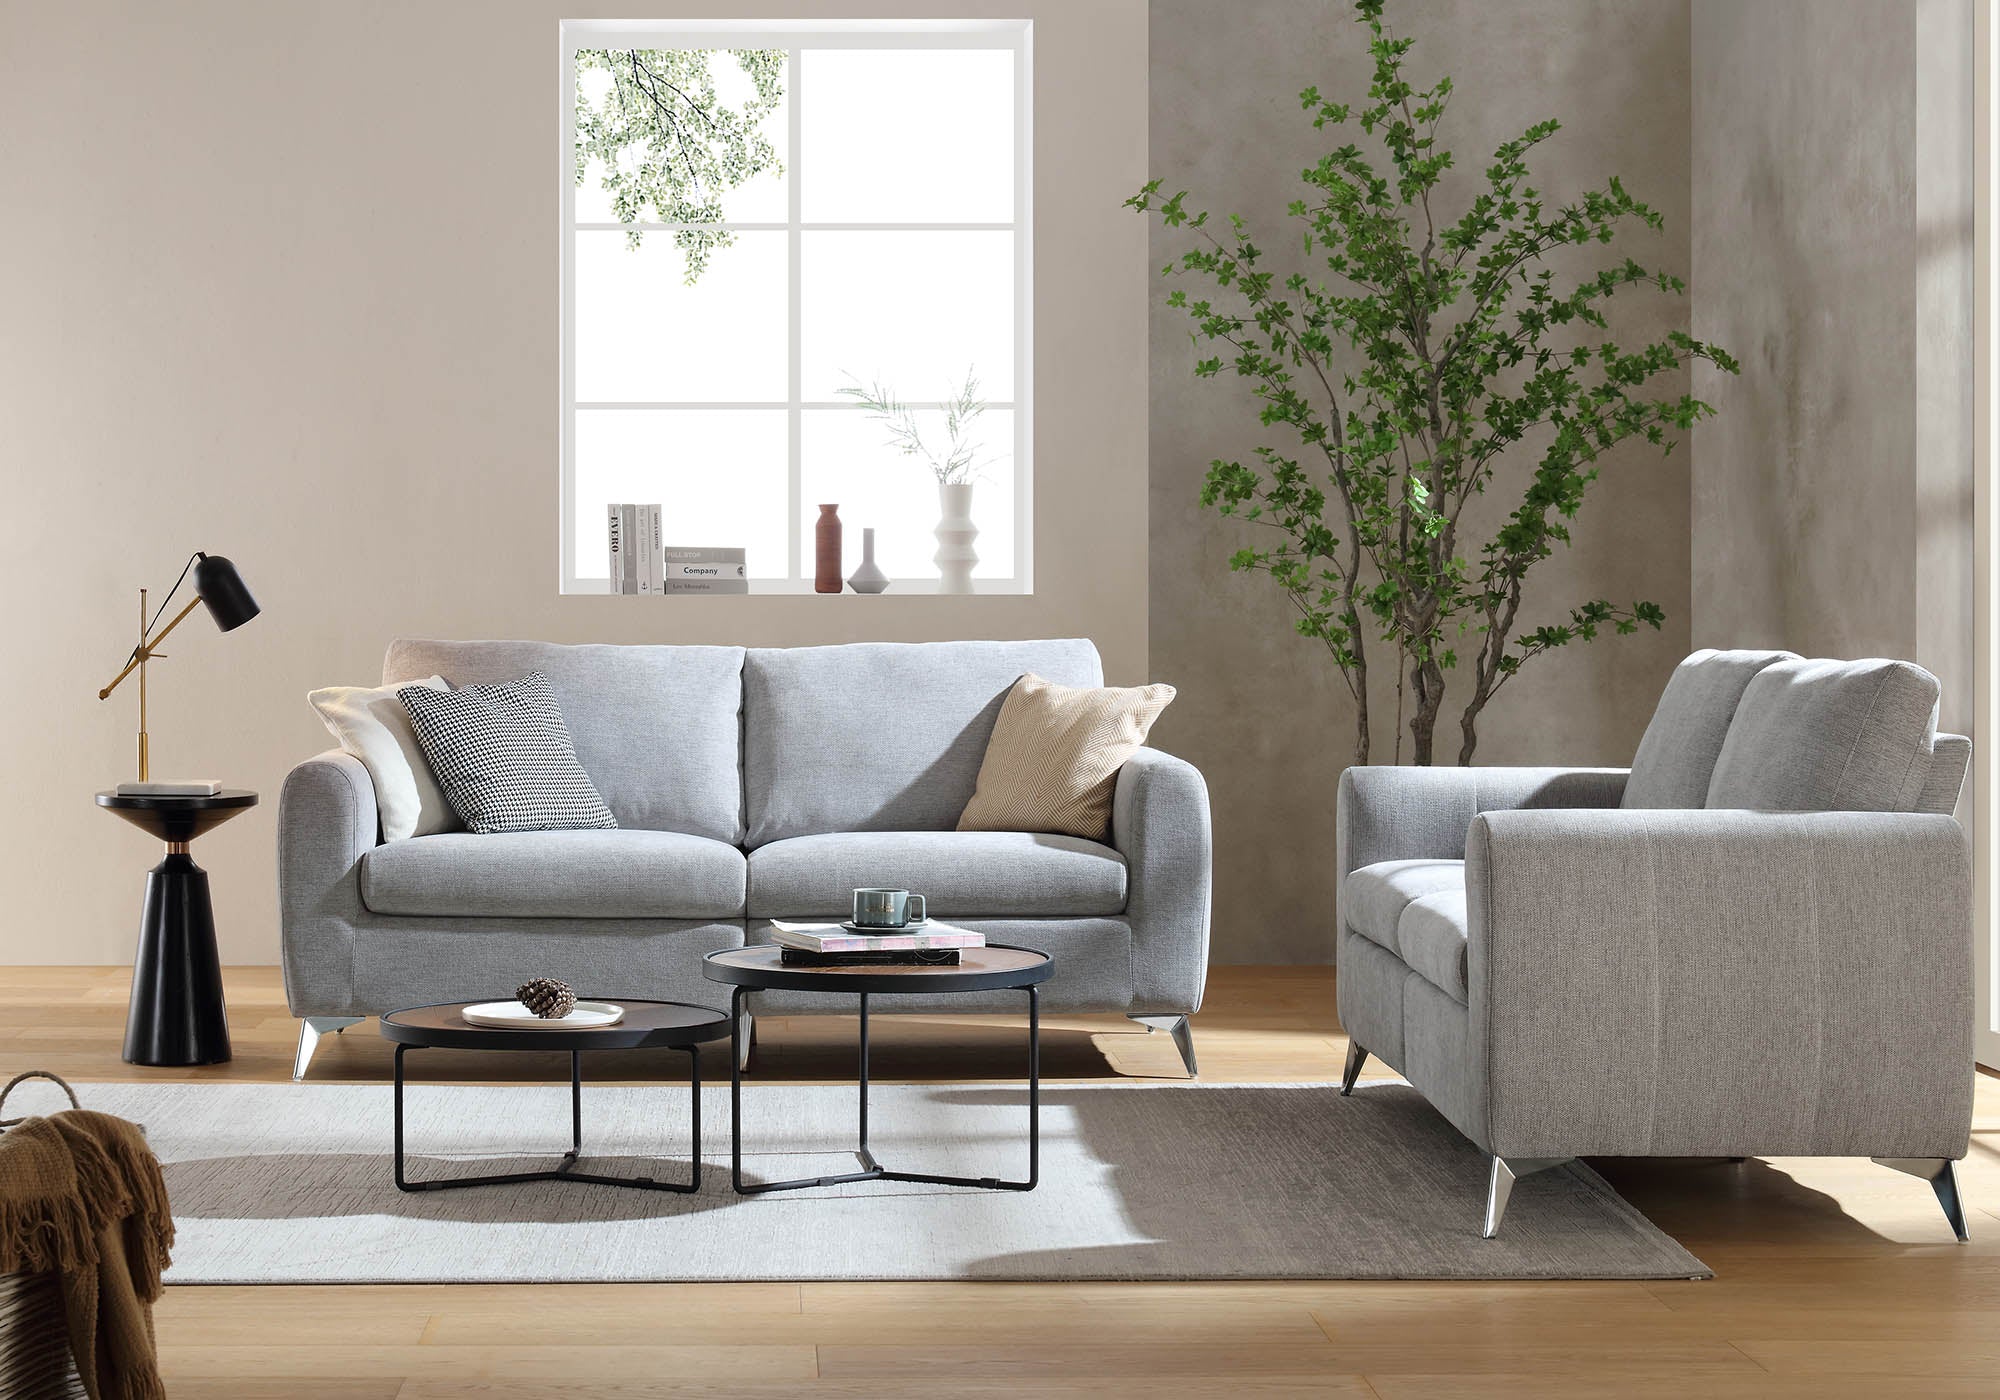 Noak 3-Seater Grey Woven Fabric Sofa with Chrome Legs